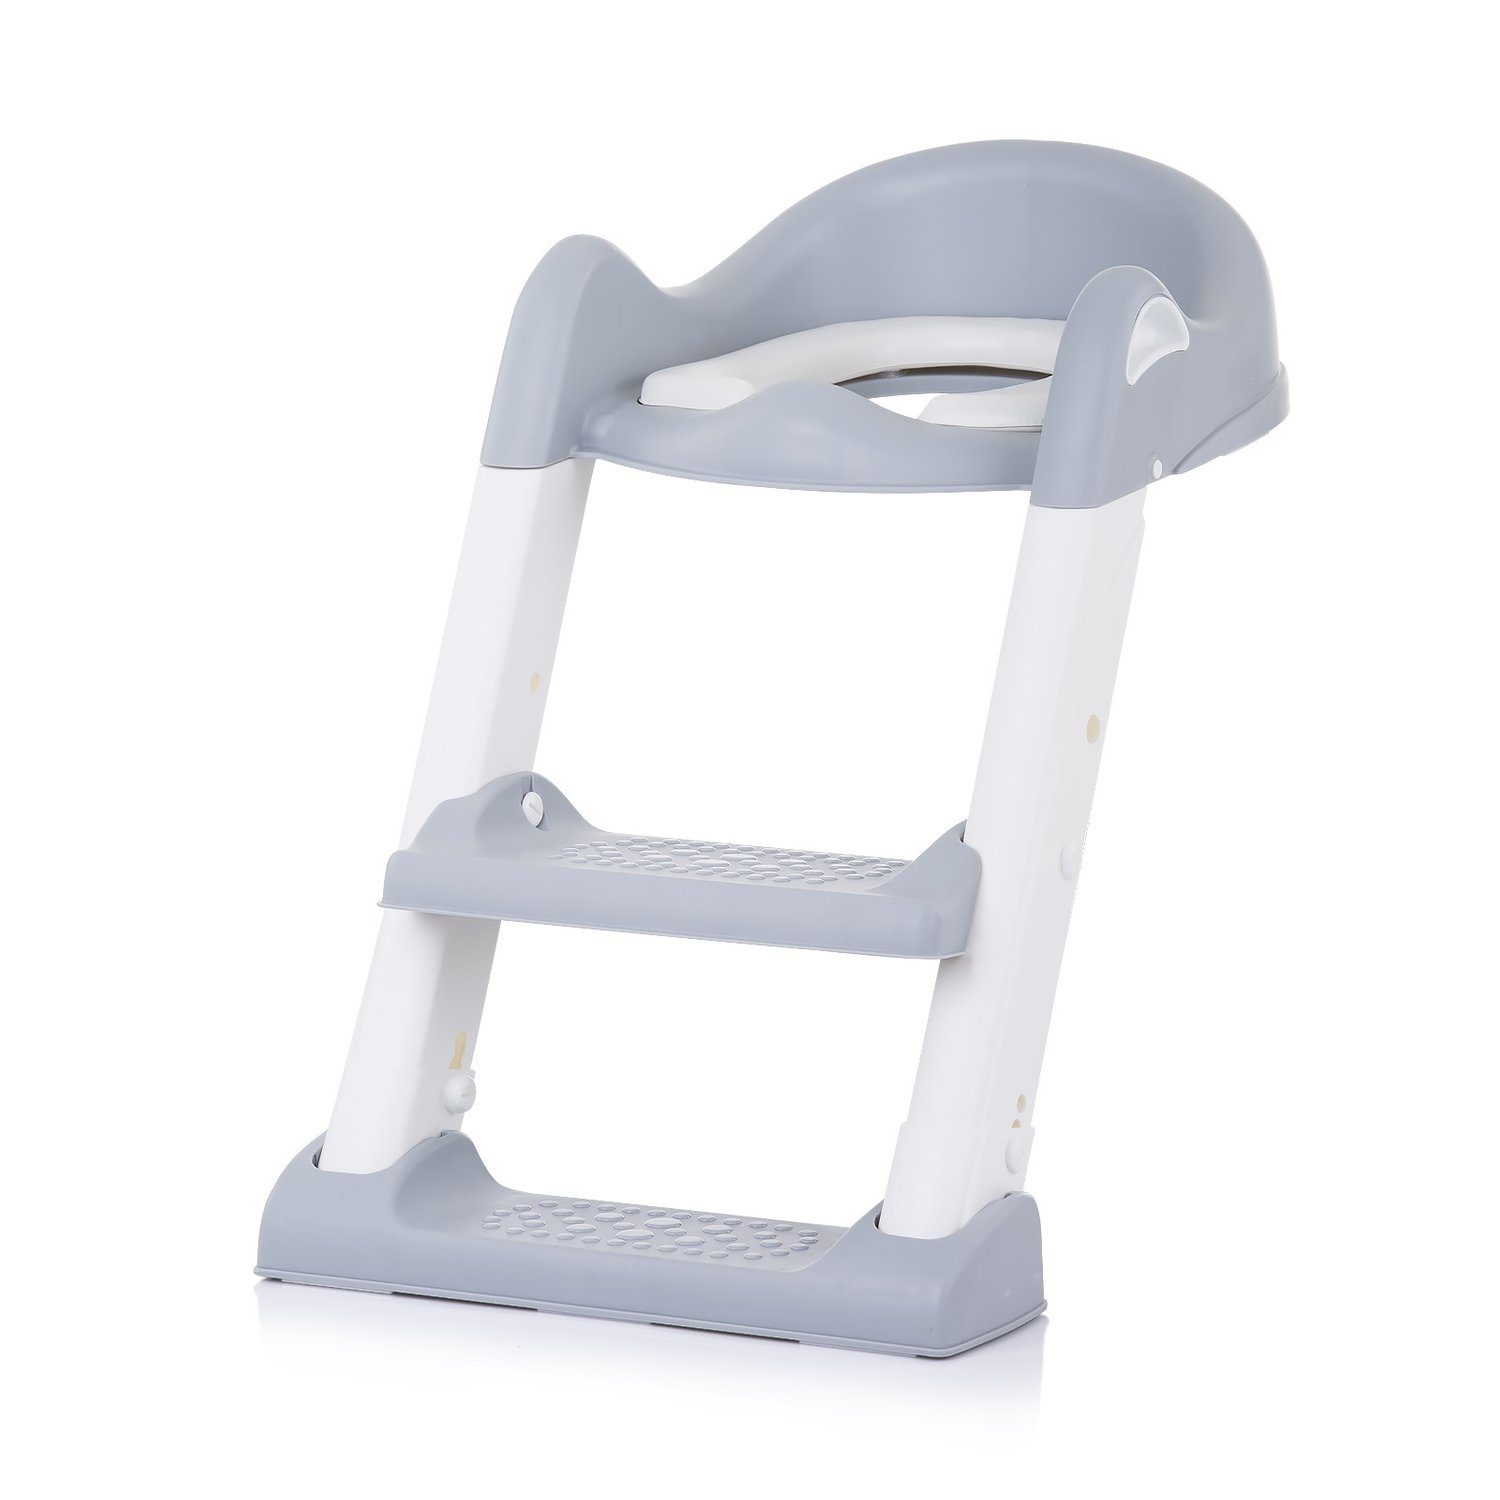 Chipolino Baby-Toilettensitz Toilettenaufsatz Toilettensitz, 55 cm, mit Leiter, Griffe, Fußstütze, kompakt